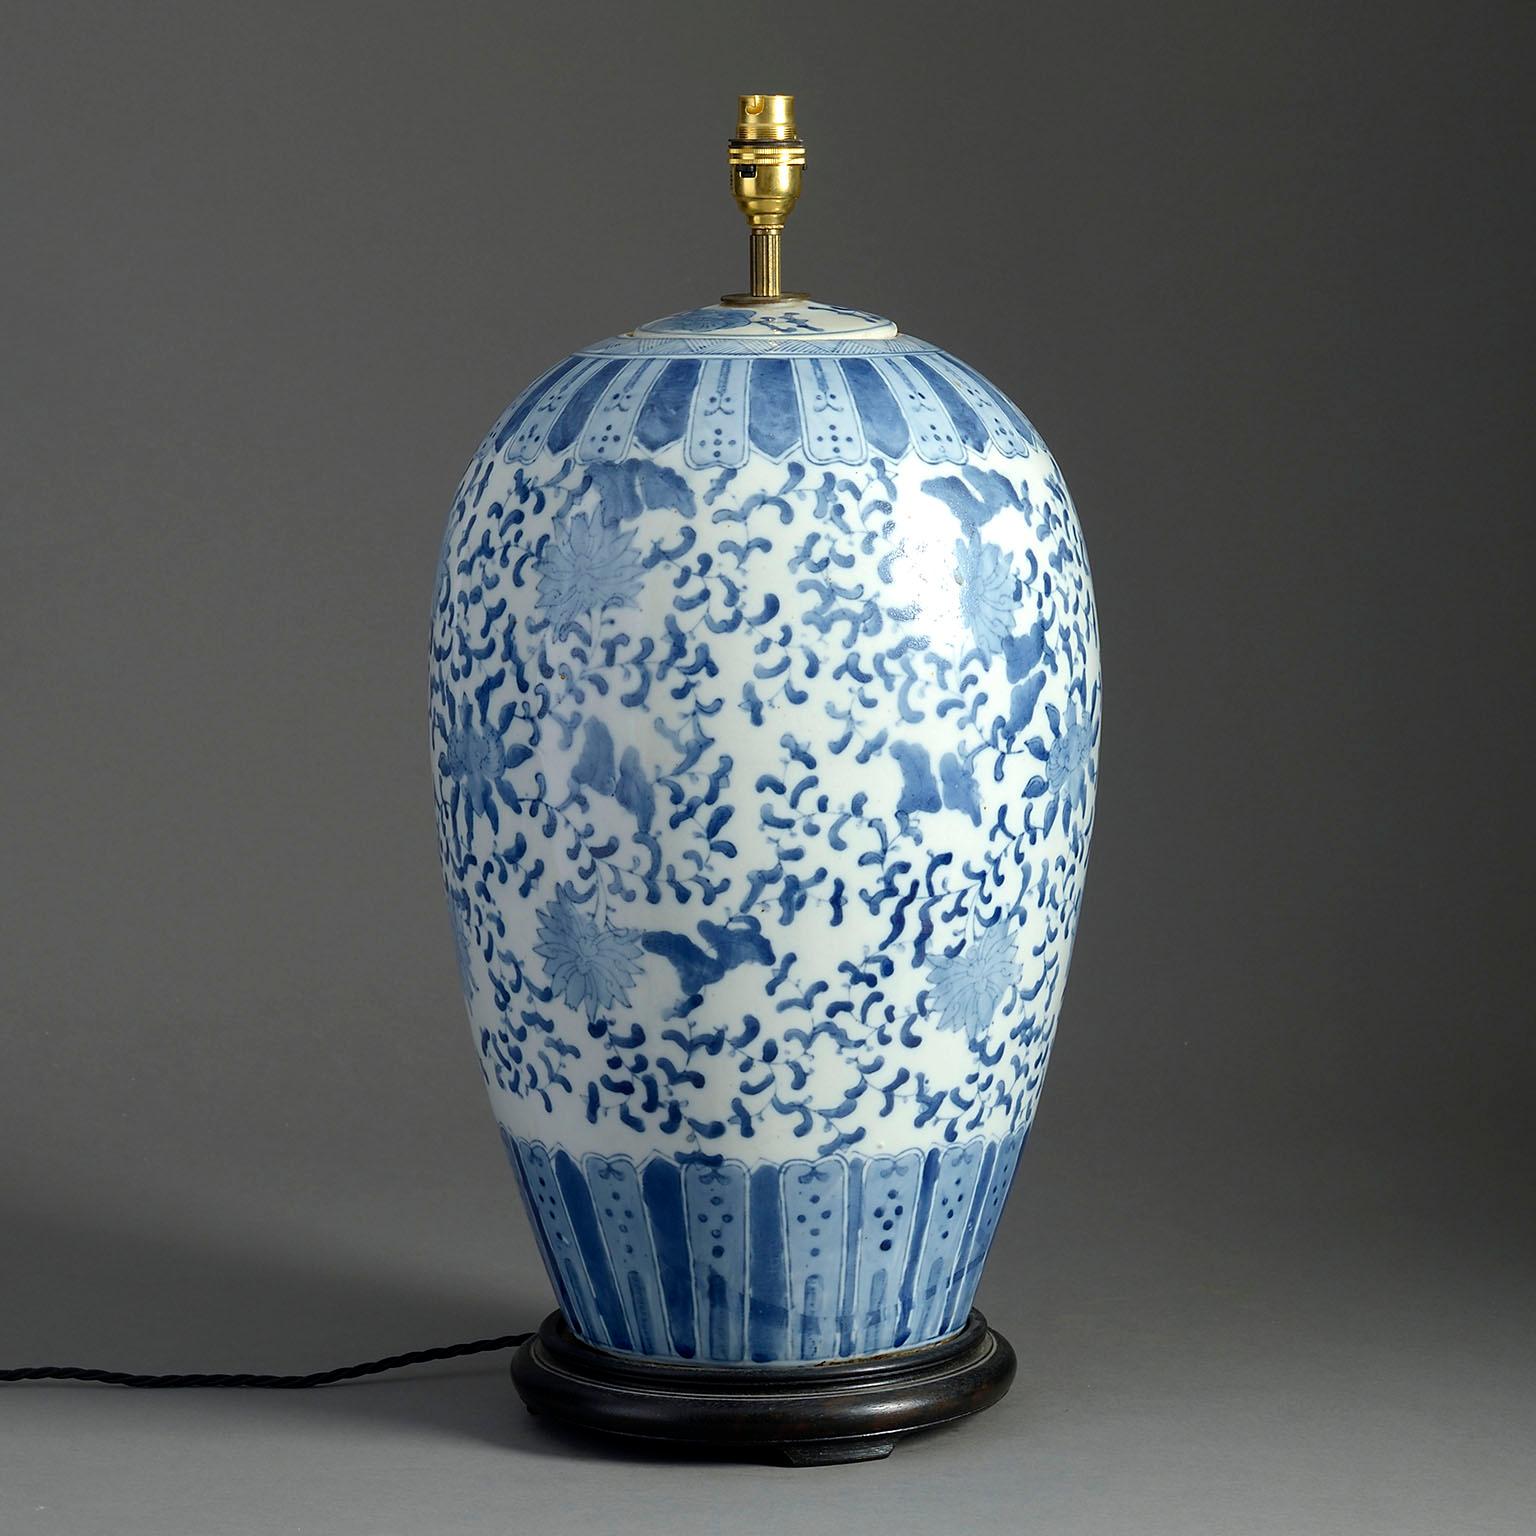 Chinese Export Large 19th Century Blue and White Glazed Porcelain Jar Lamp